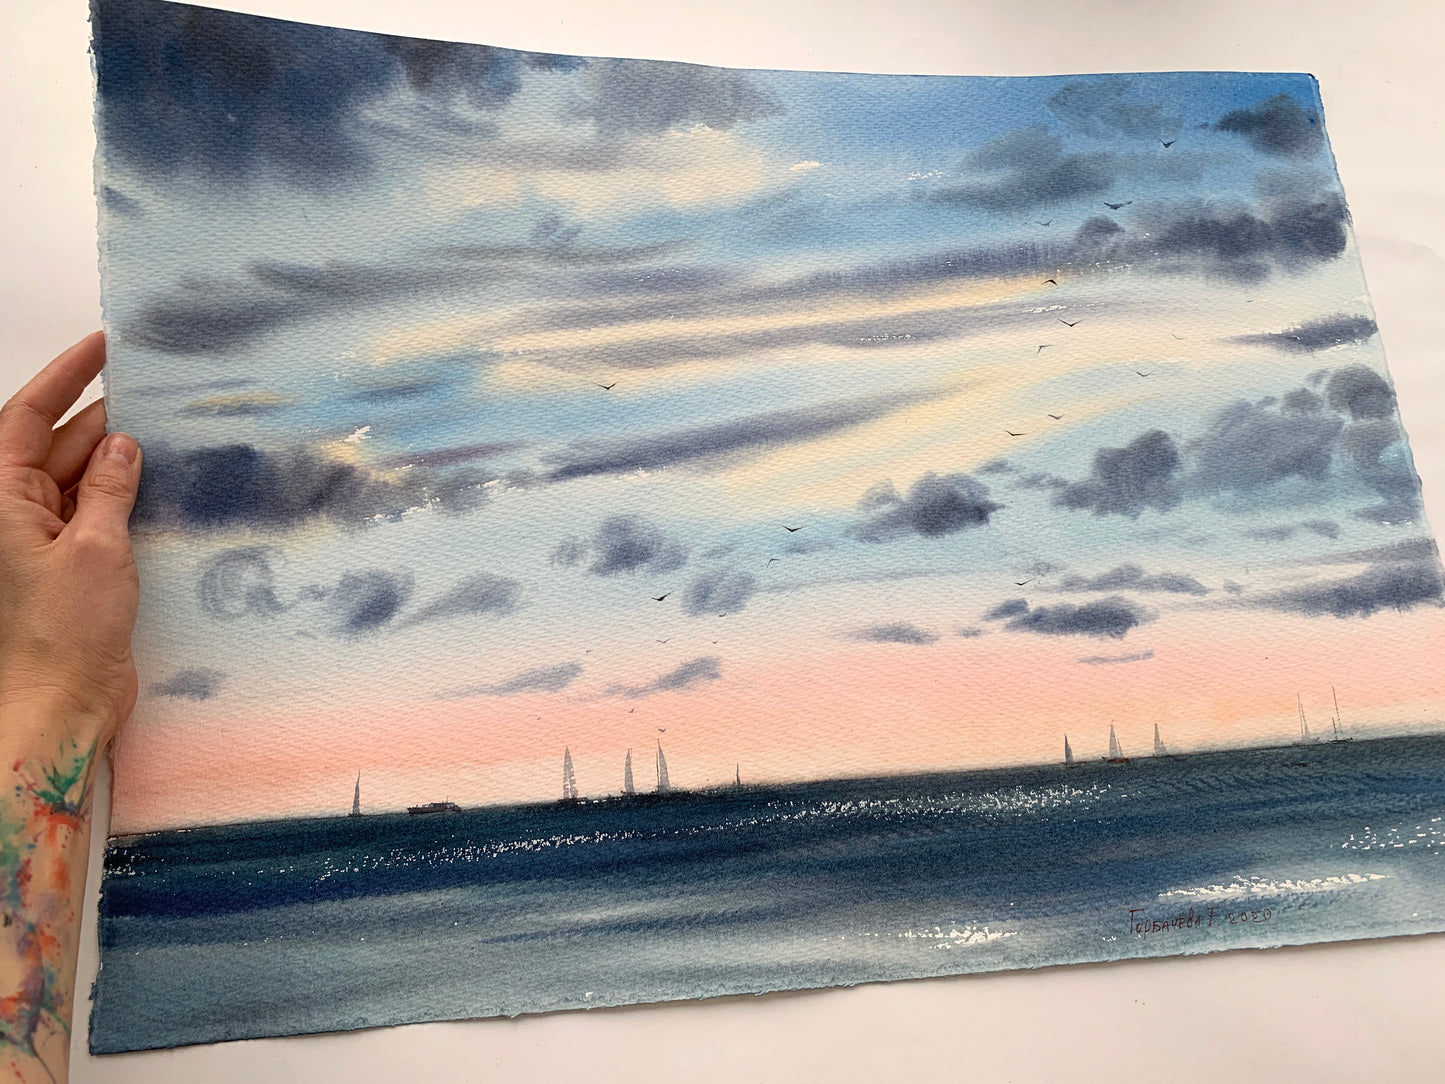 Watercolor Painting Original - Sea before sunset - 16 x 22 in